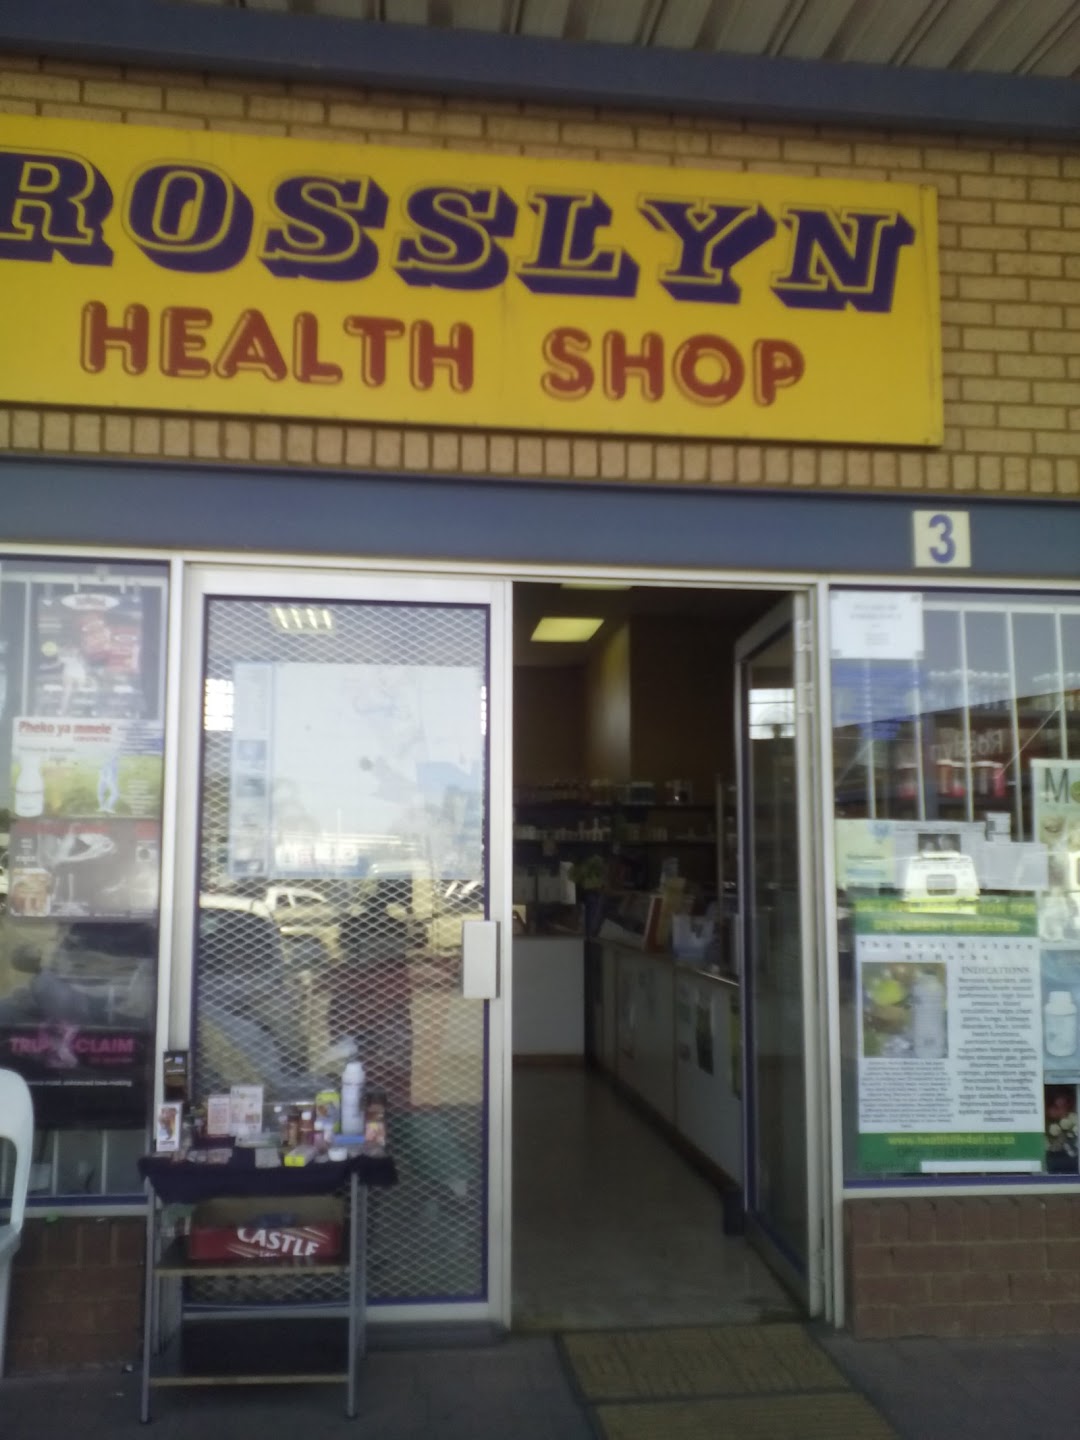 Rosslyn Health Shop